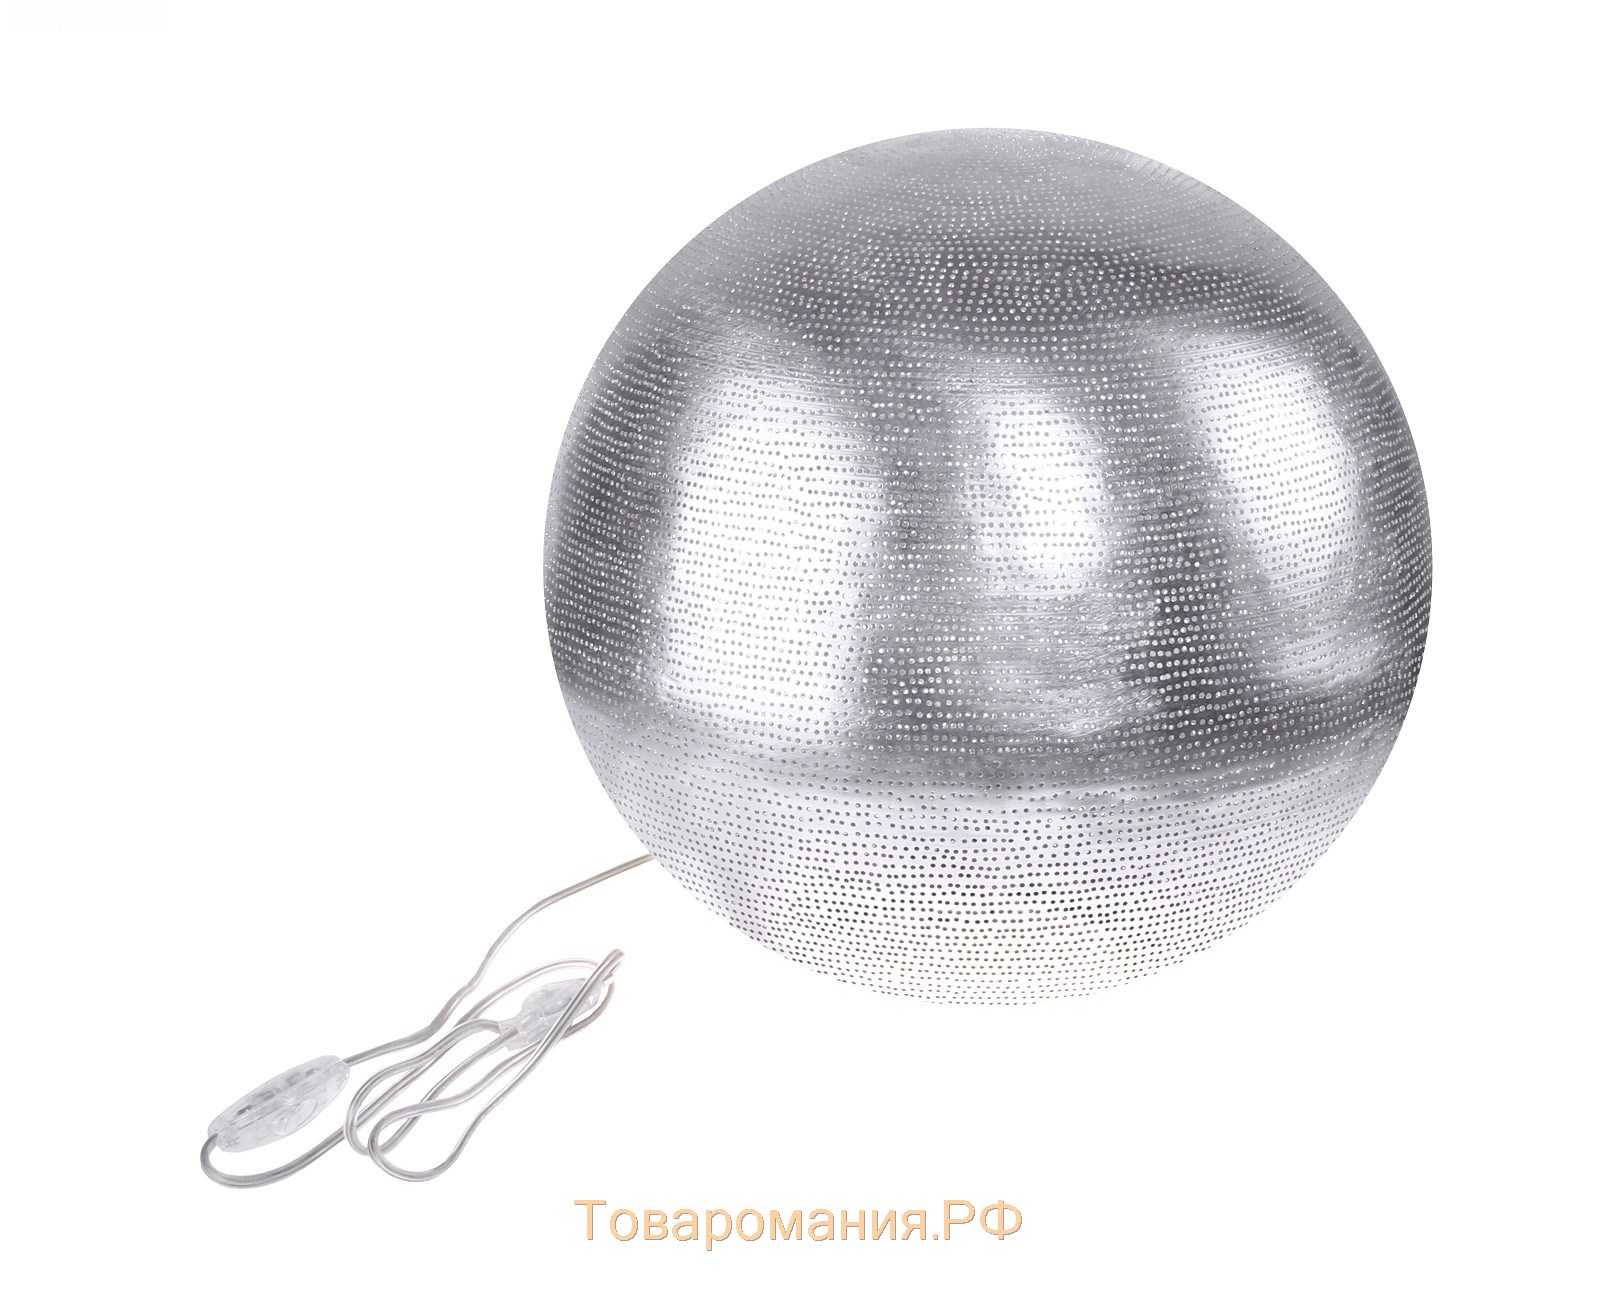 Лампа настольная-напольная "Ball sky" от сети, 30 × 30 см